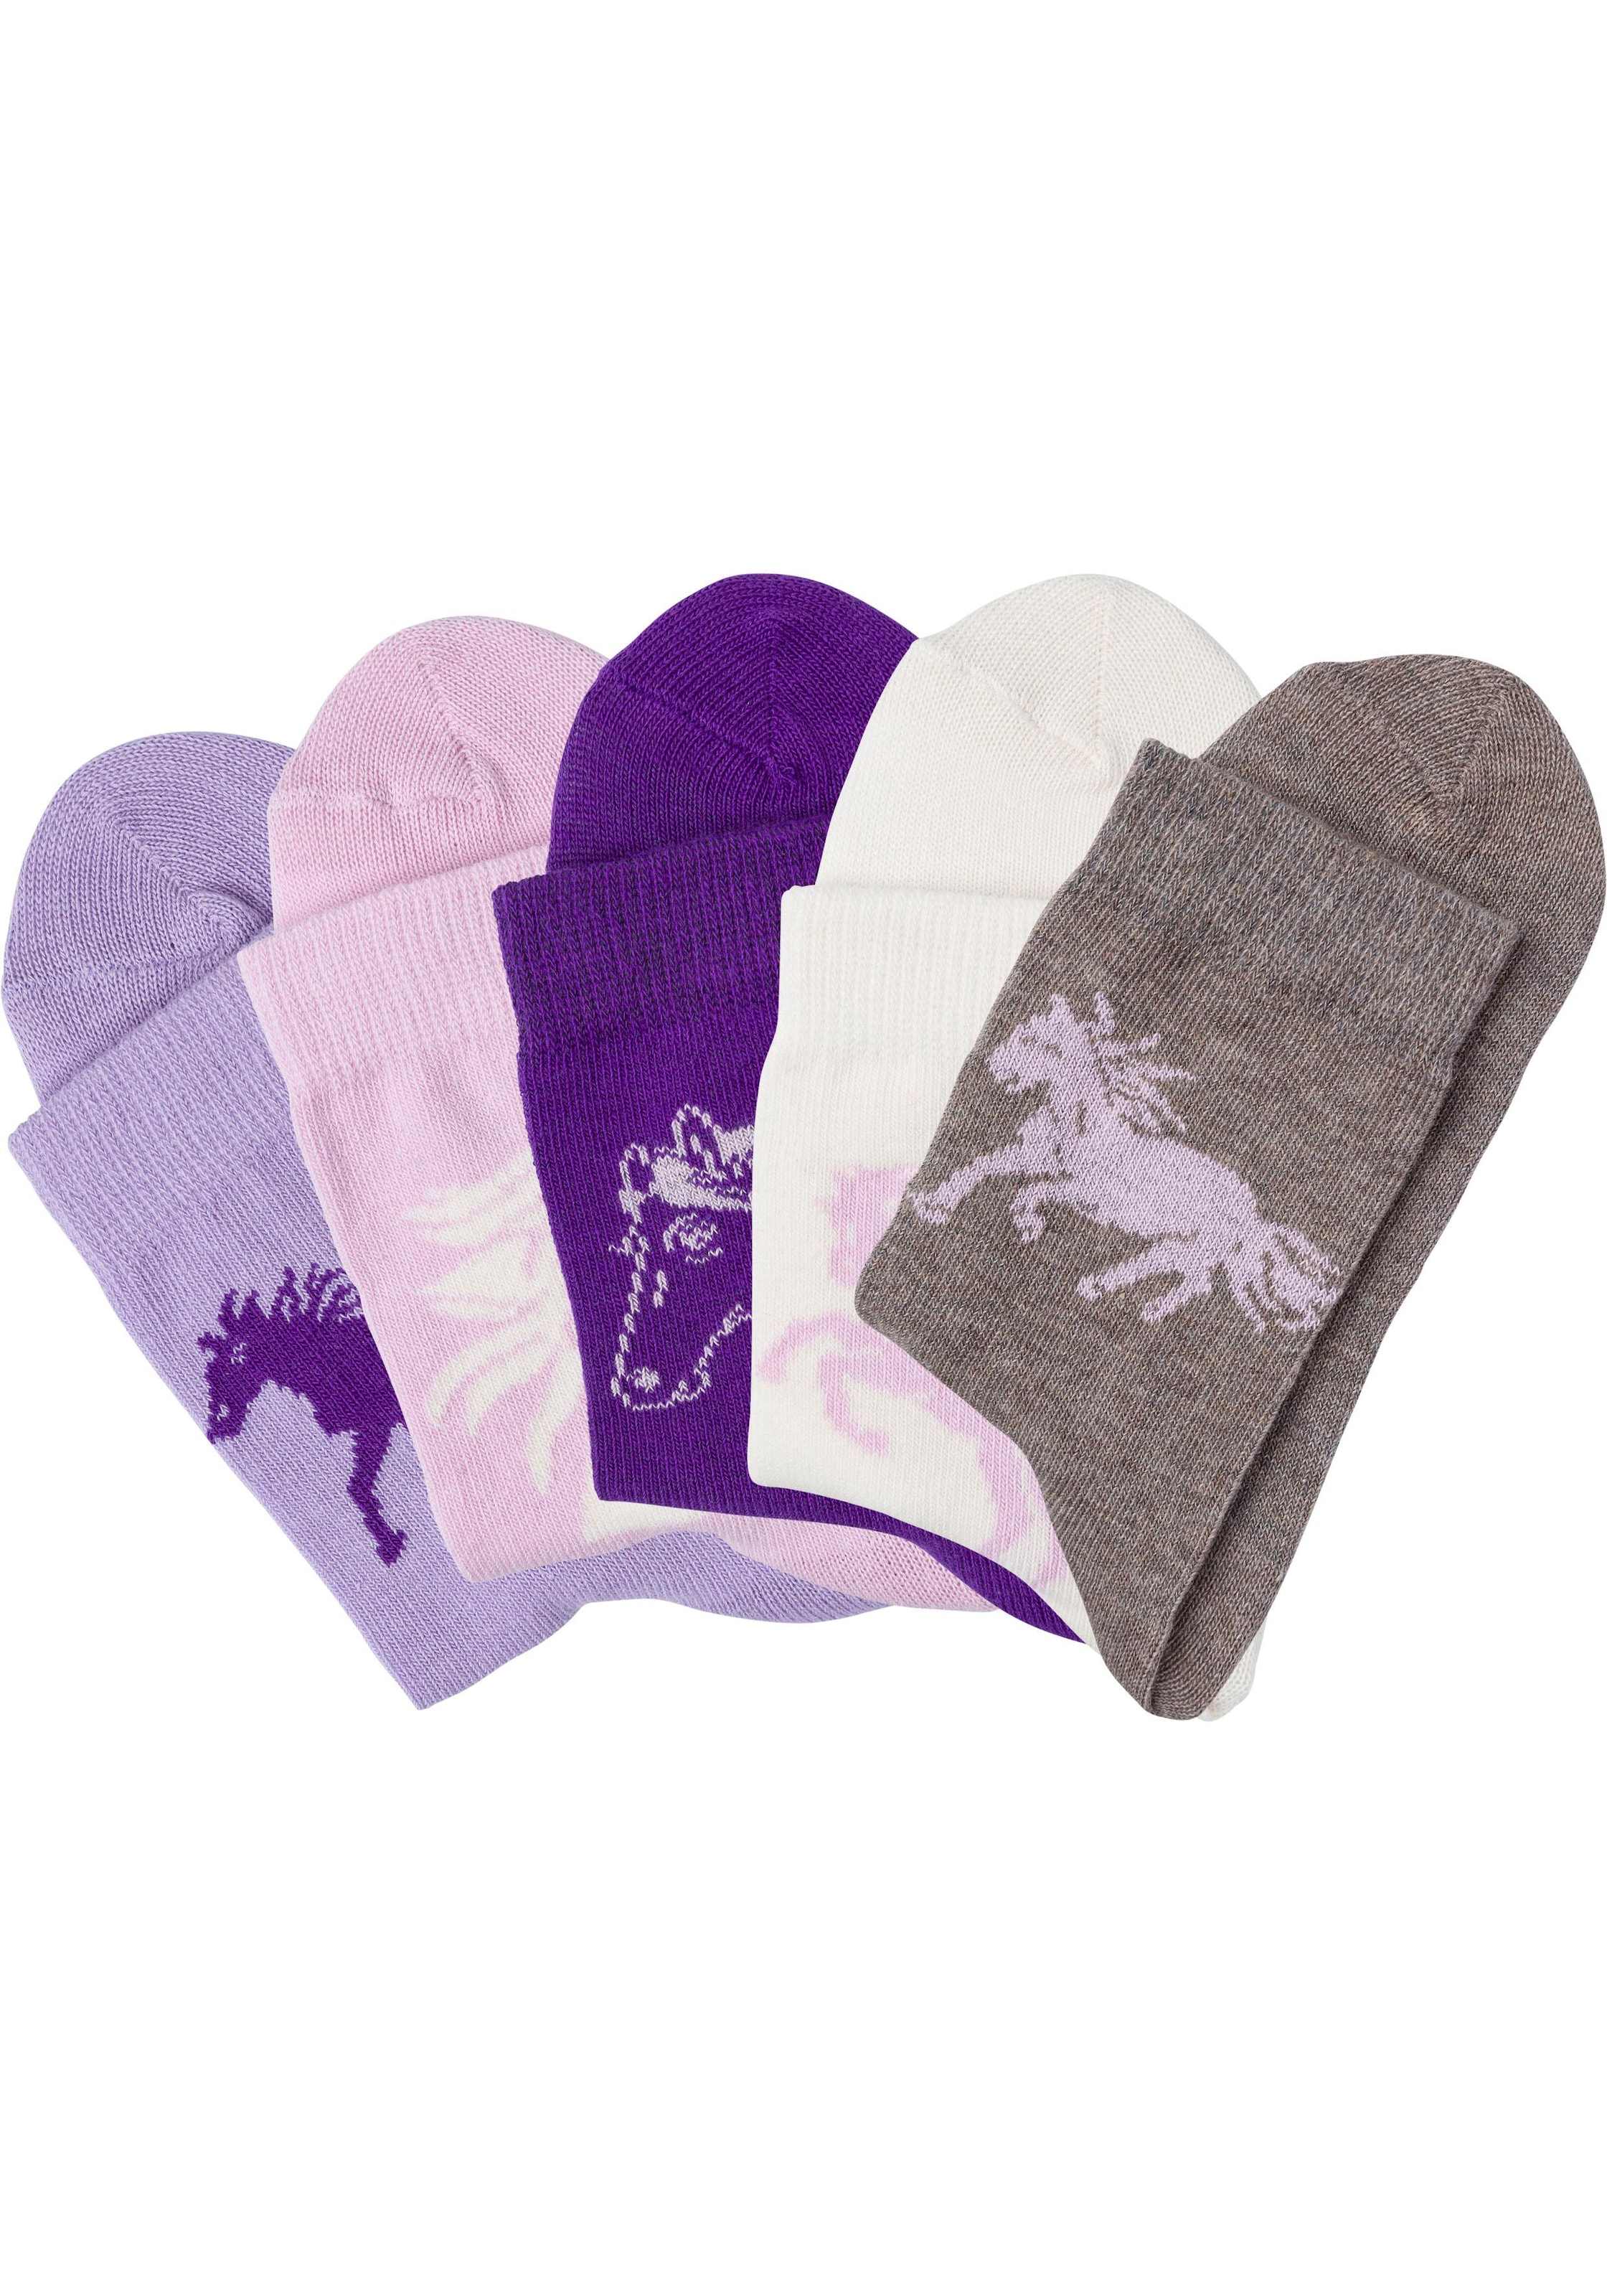 Pferdemotiven Socken, online mit bestellen (5 Paar), H.I.S